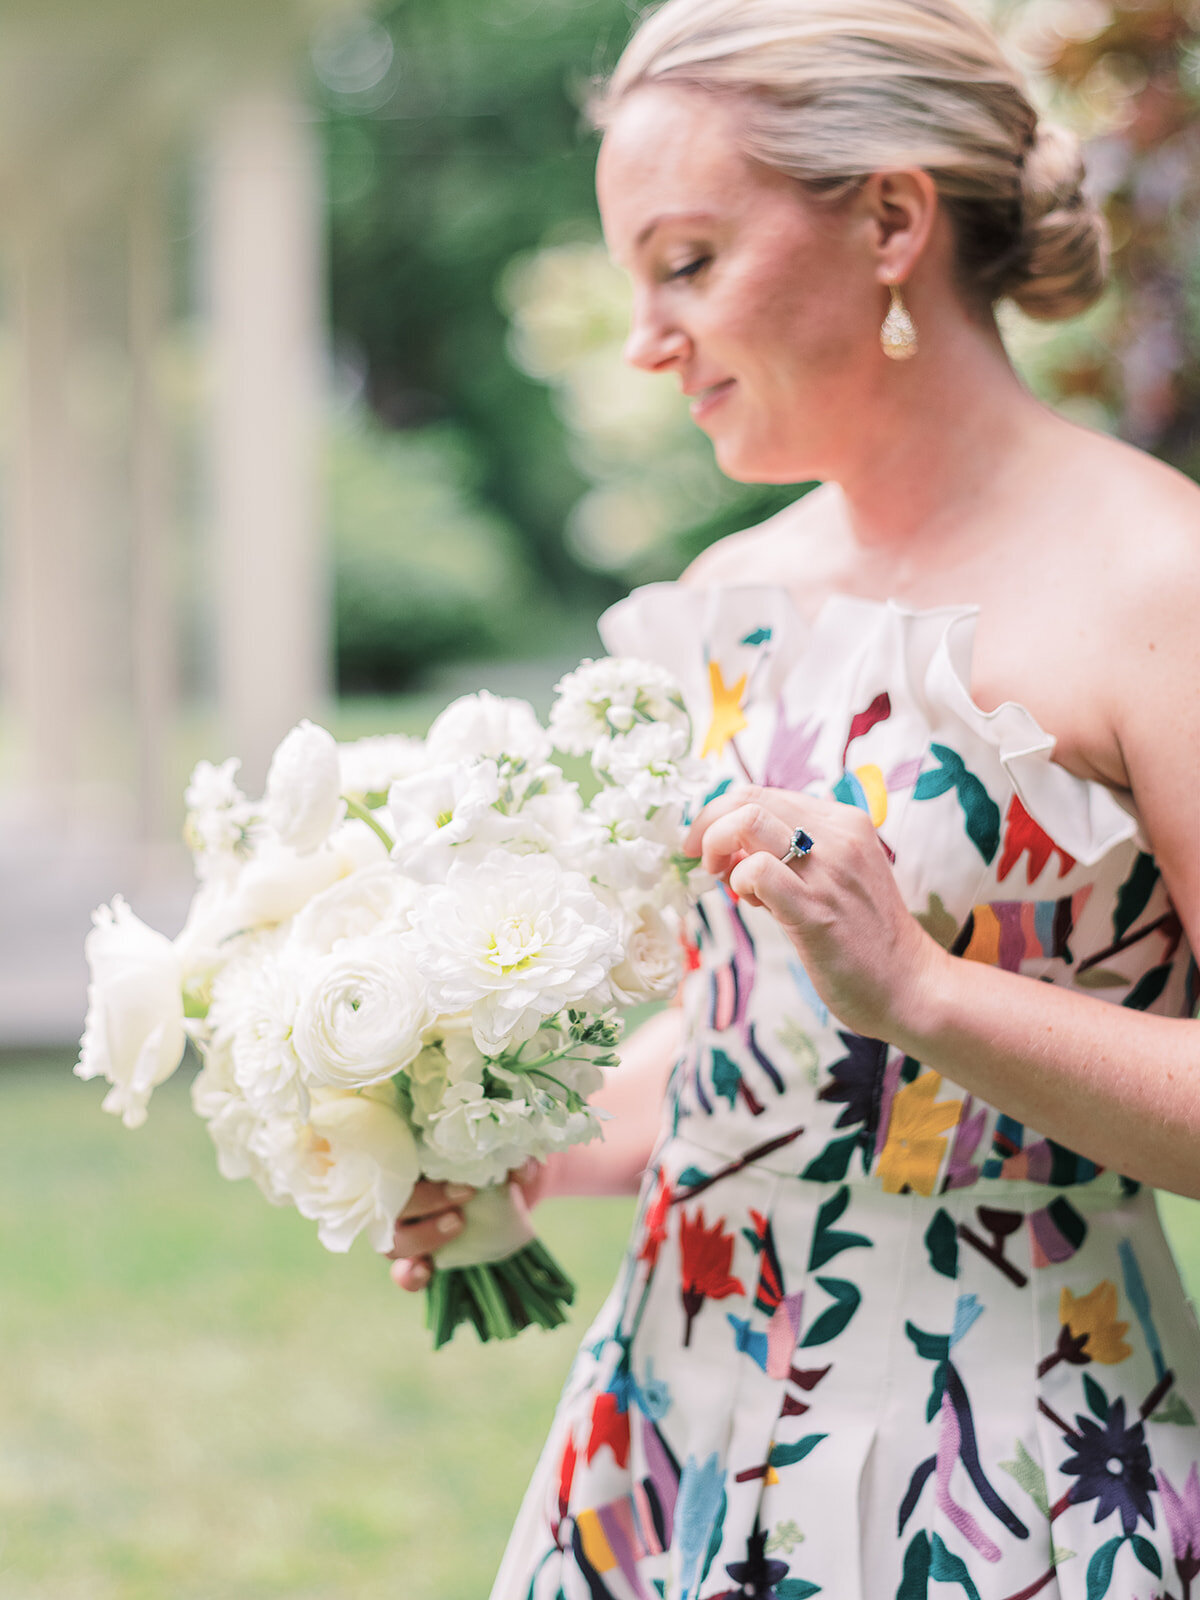 Kate-Murtaugh-Events-Boston-MA-wedding-planner-white-bridal-bouquet-Carolina-Herrera-wedding-dress-colorful